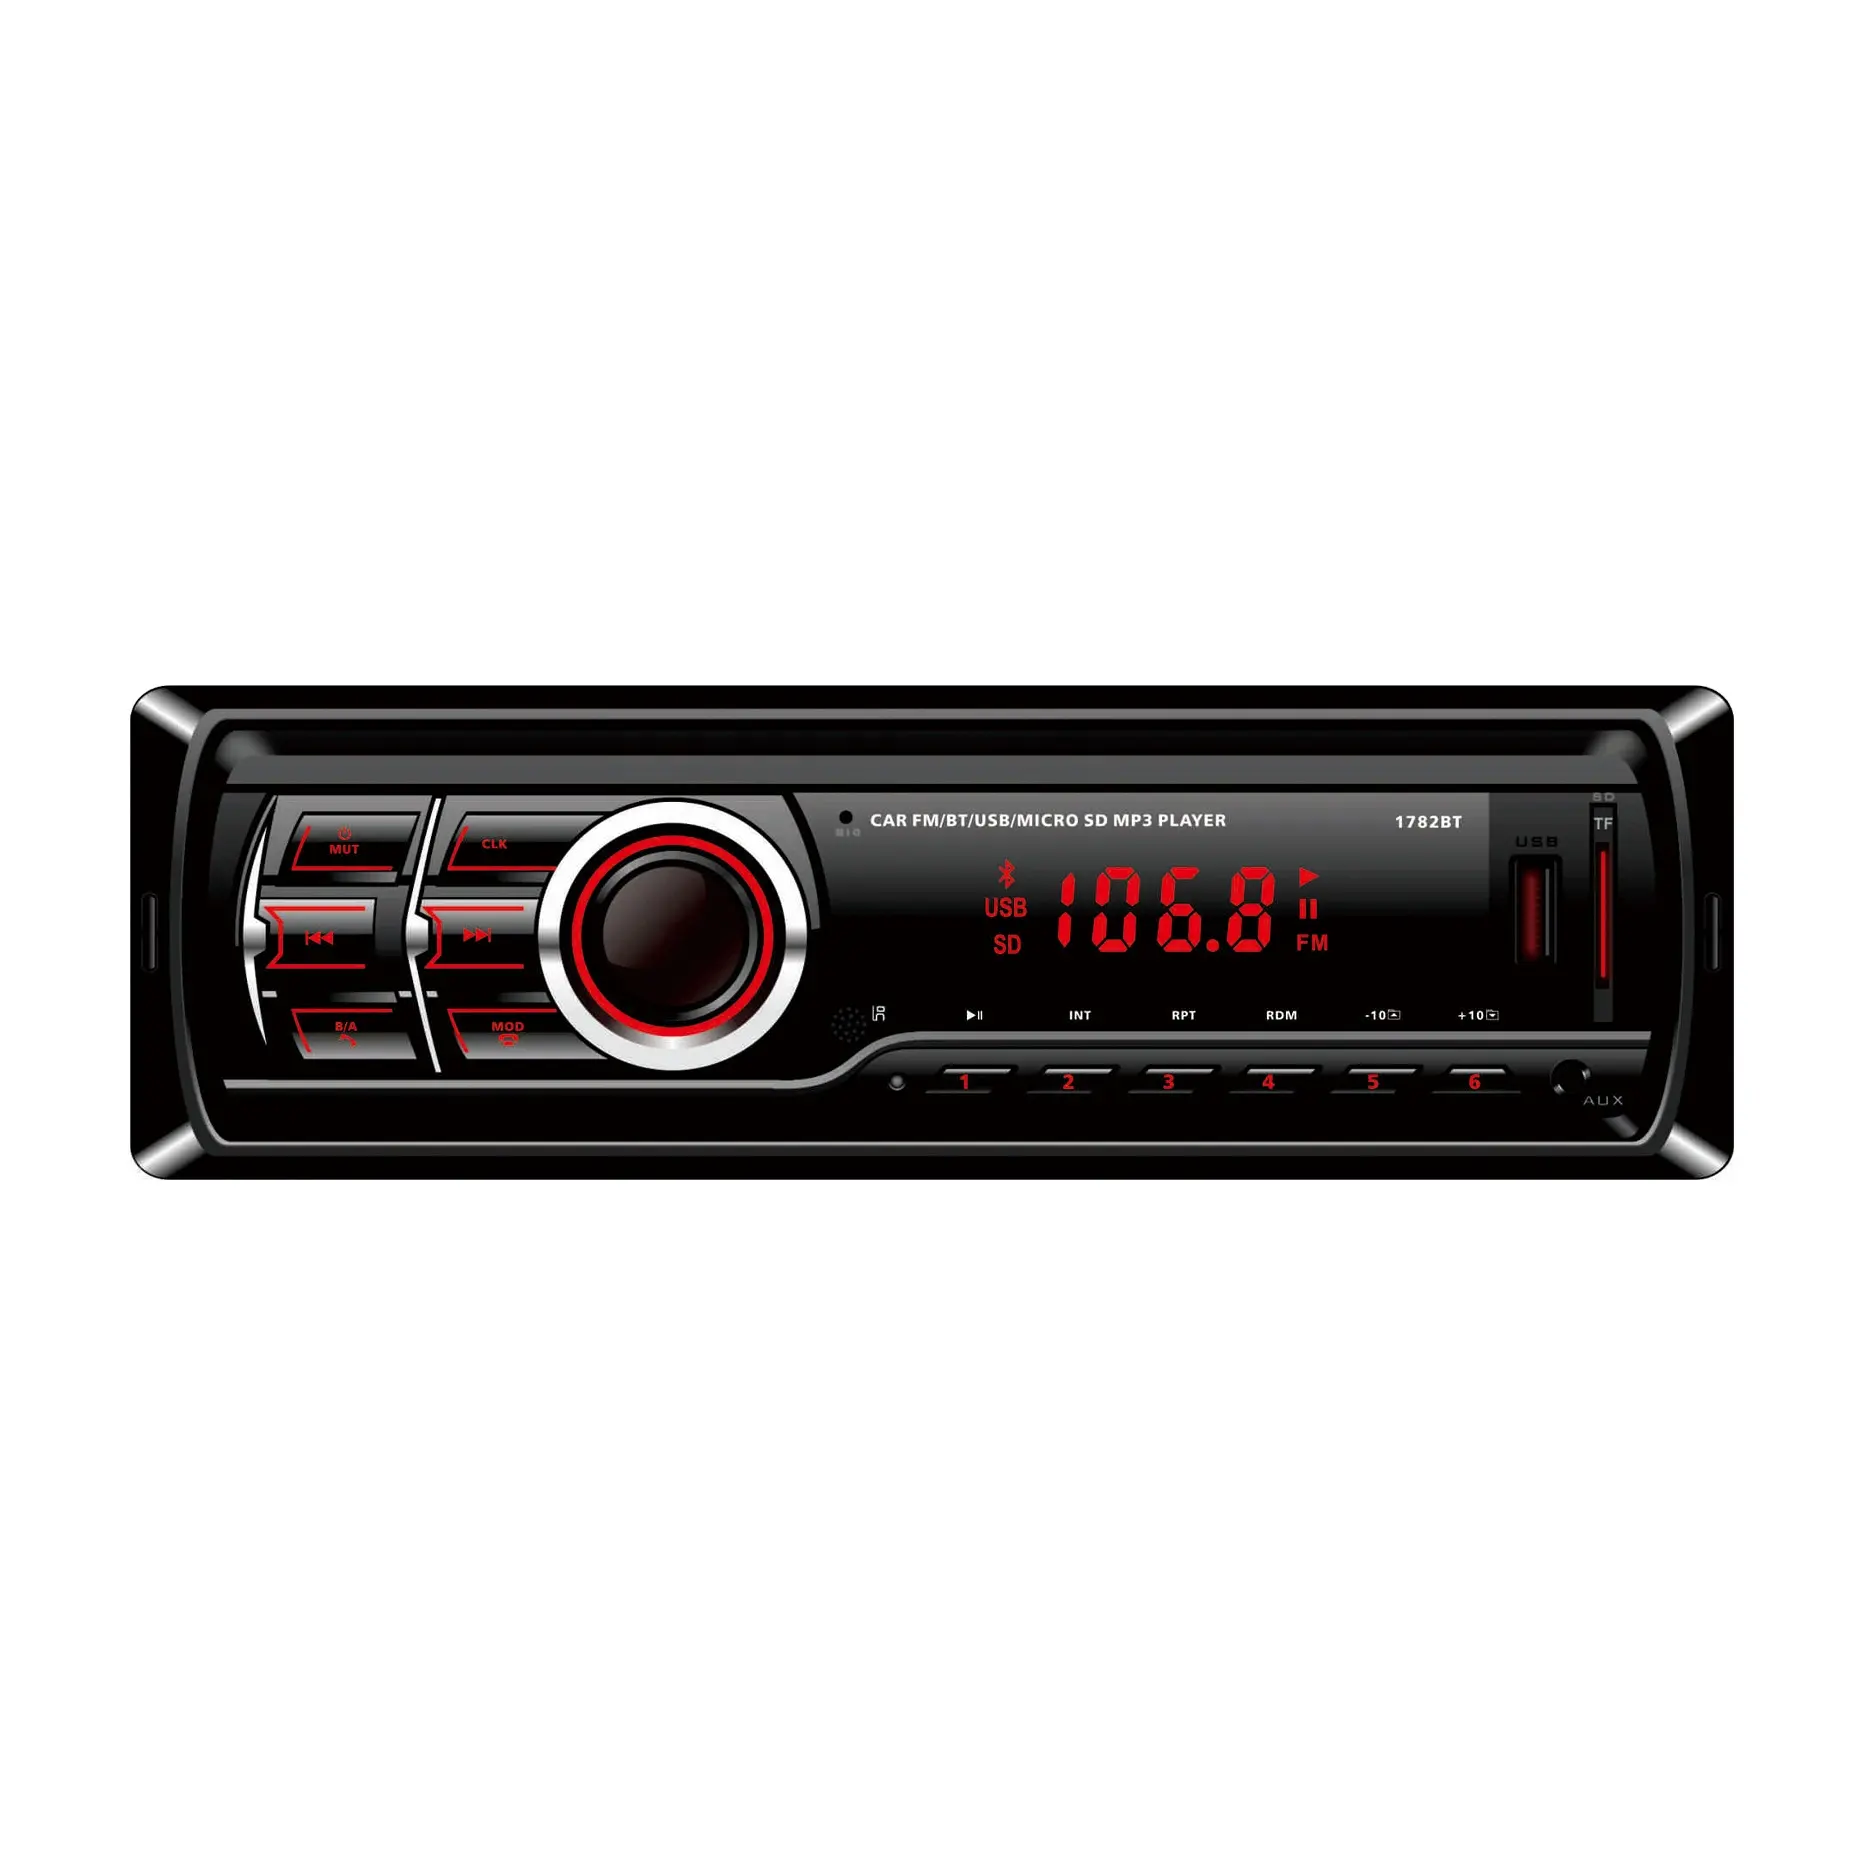 Carro Mp3 Receptor Universal Rádio Speaker Bluetooth Usb Jump Drive Usb Aux Bluetooth Carro Música Digital Cd Changer 1782 LED BT